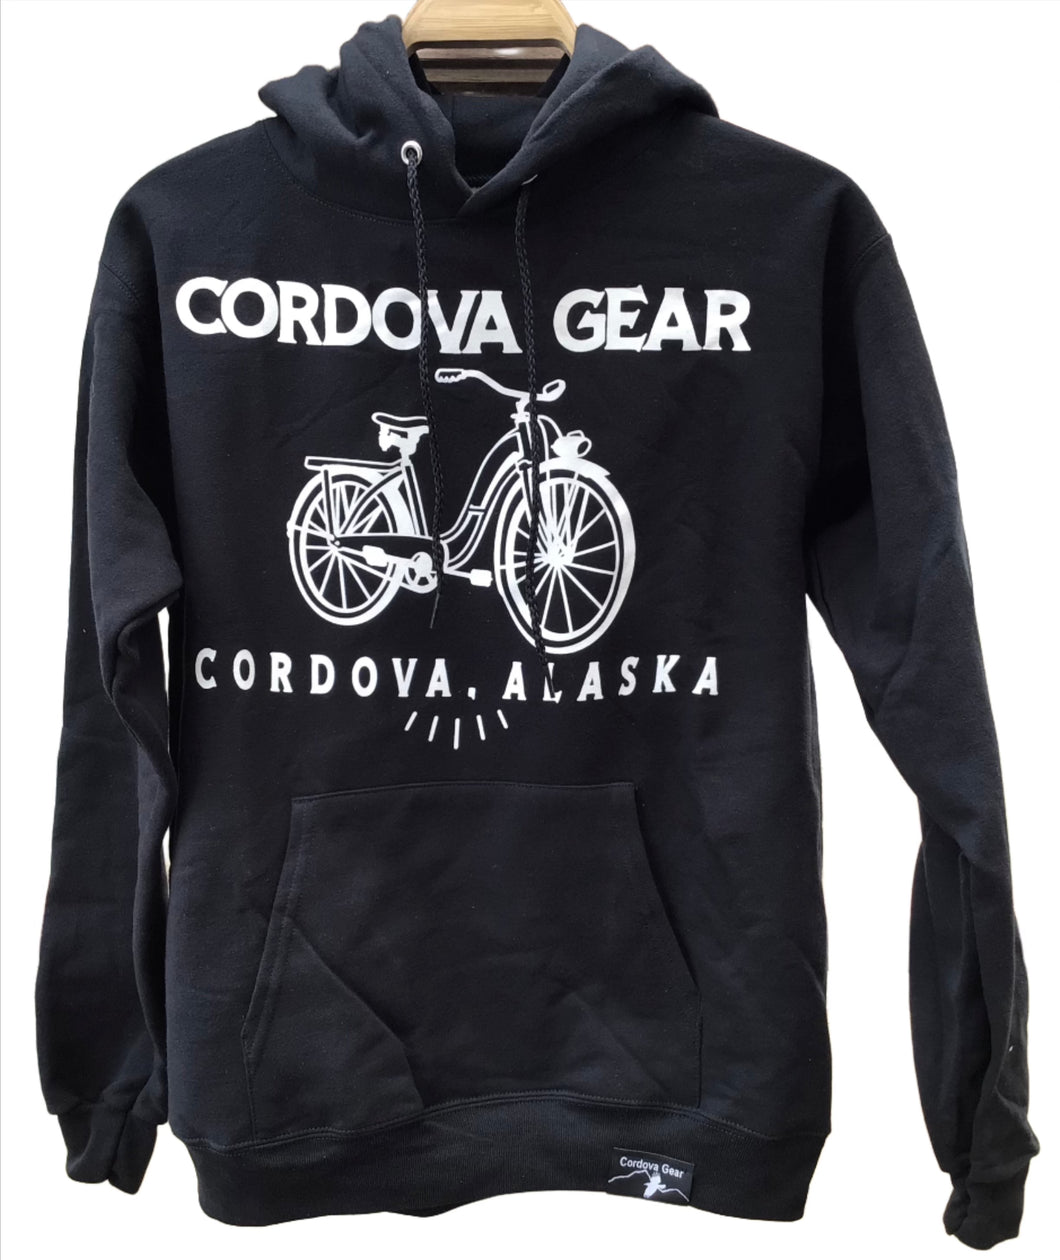 Cordova Gear Alaska Bicycle Logo Hoody